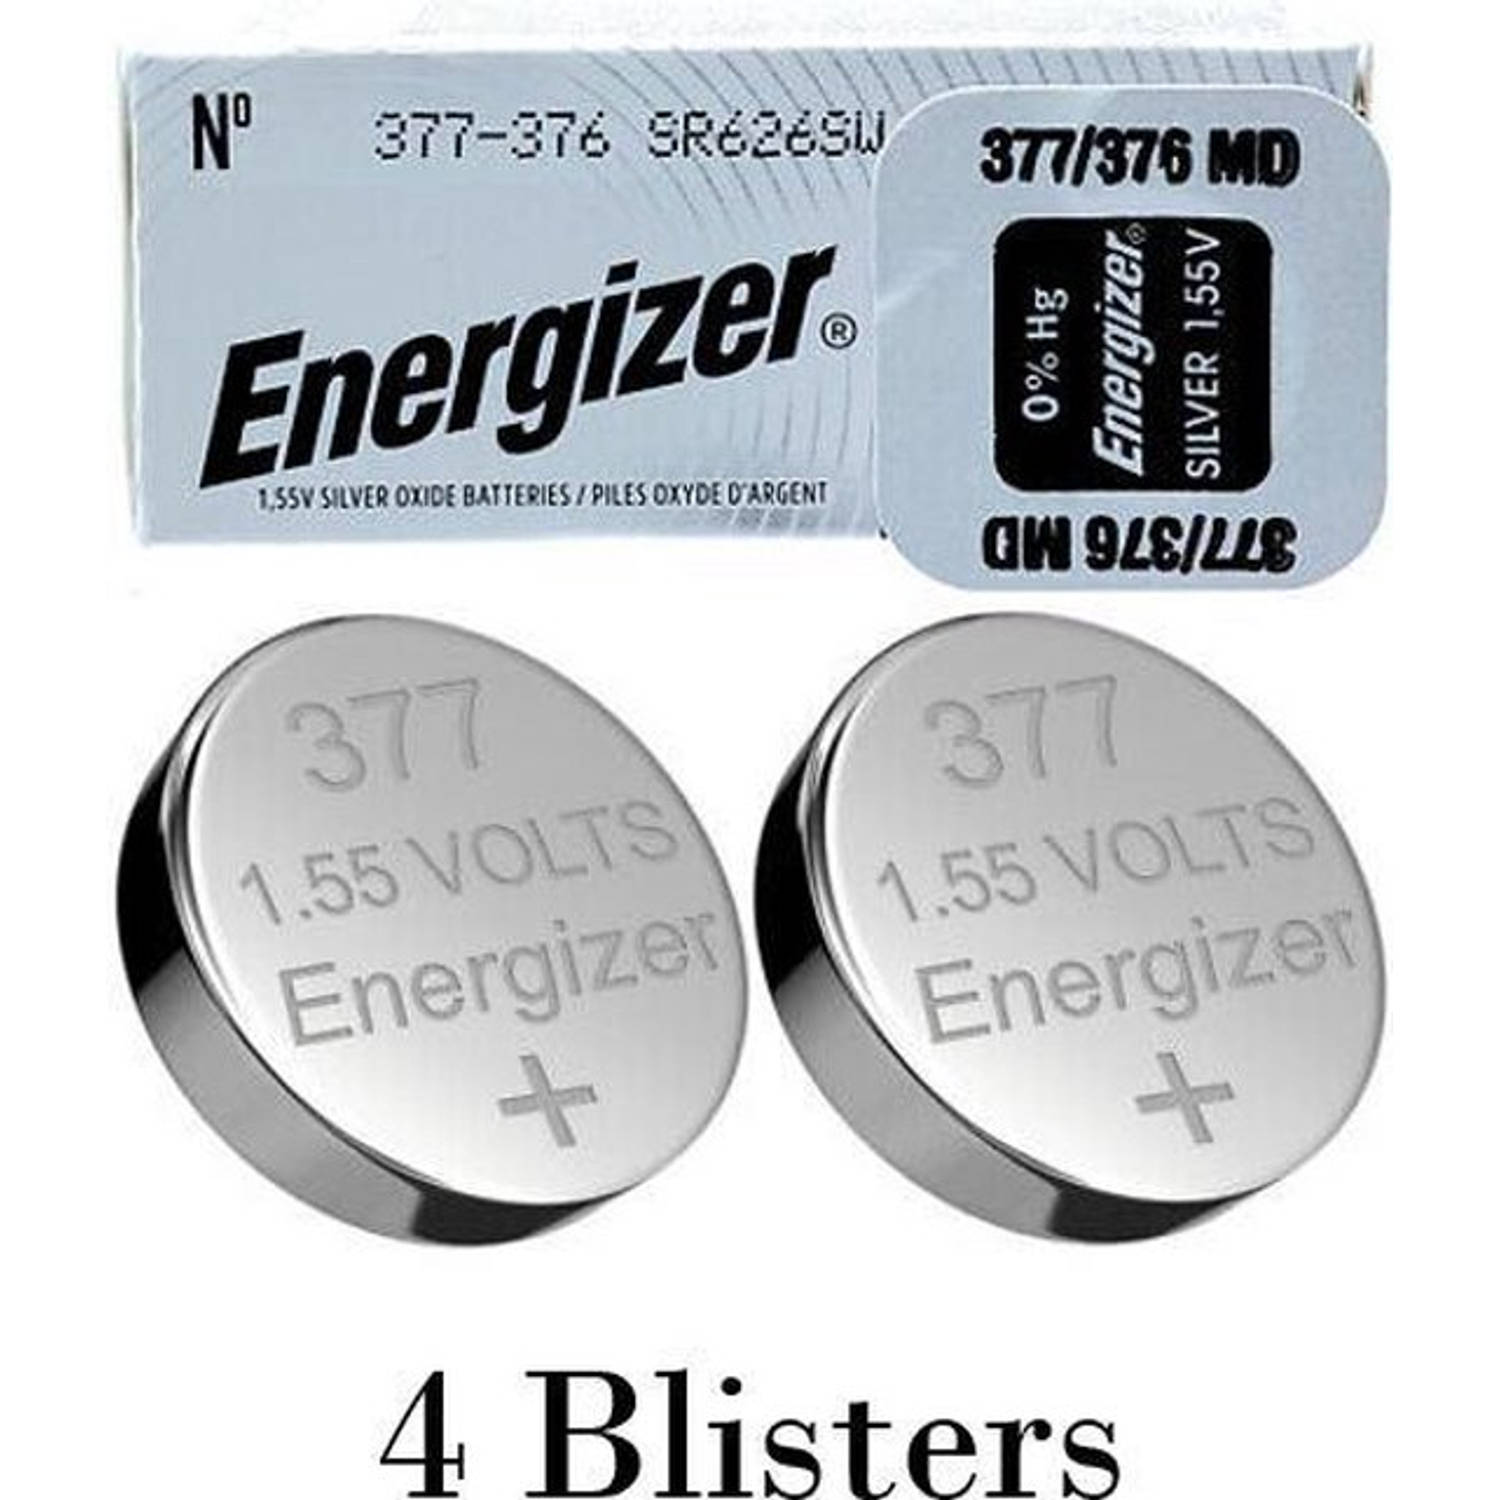 huwelijk rots Knuppel 4 stuks (4 blisters a 1 stuk) Energizer 376/377 MD 1.55V knoopcel batterij  | Blokker